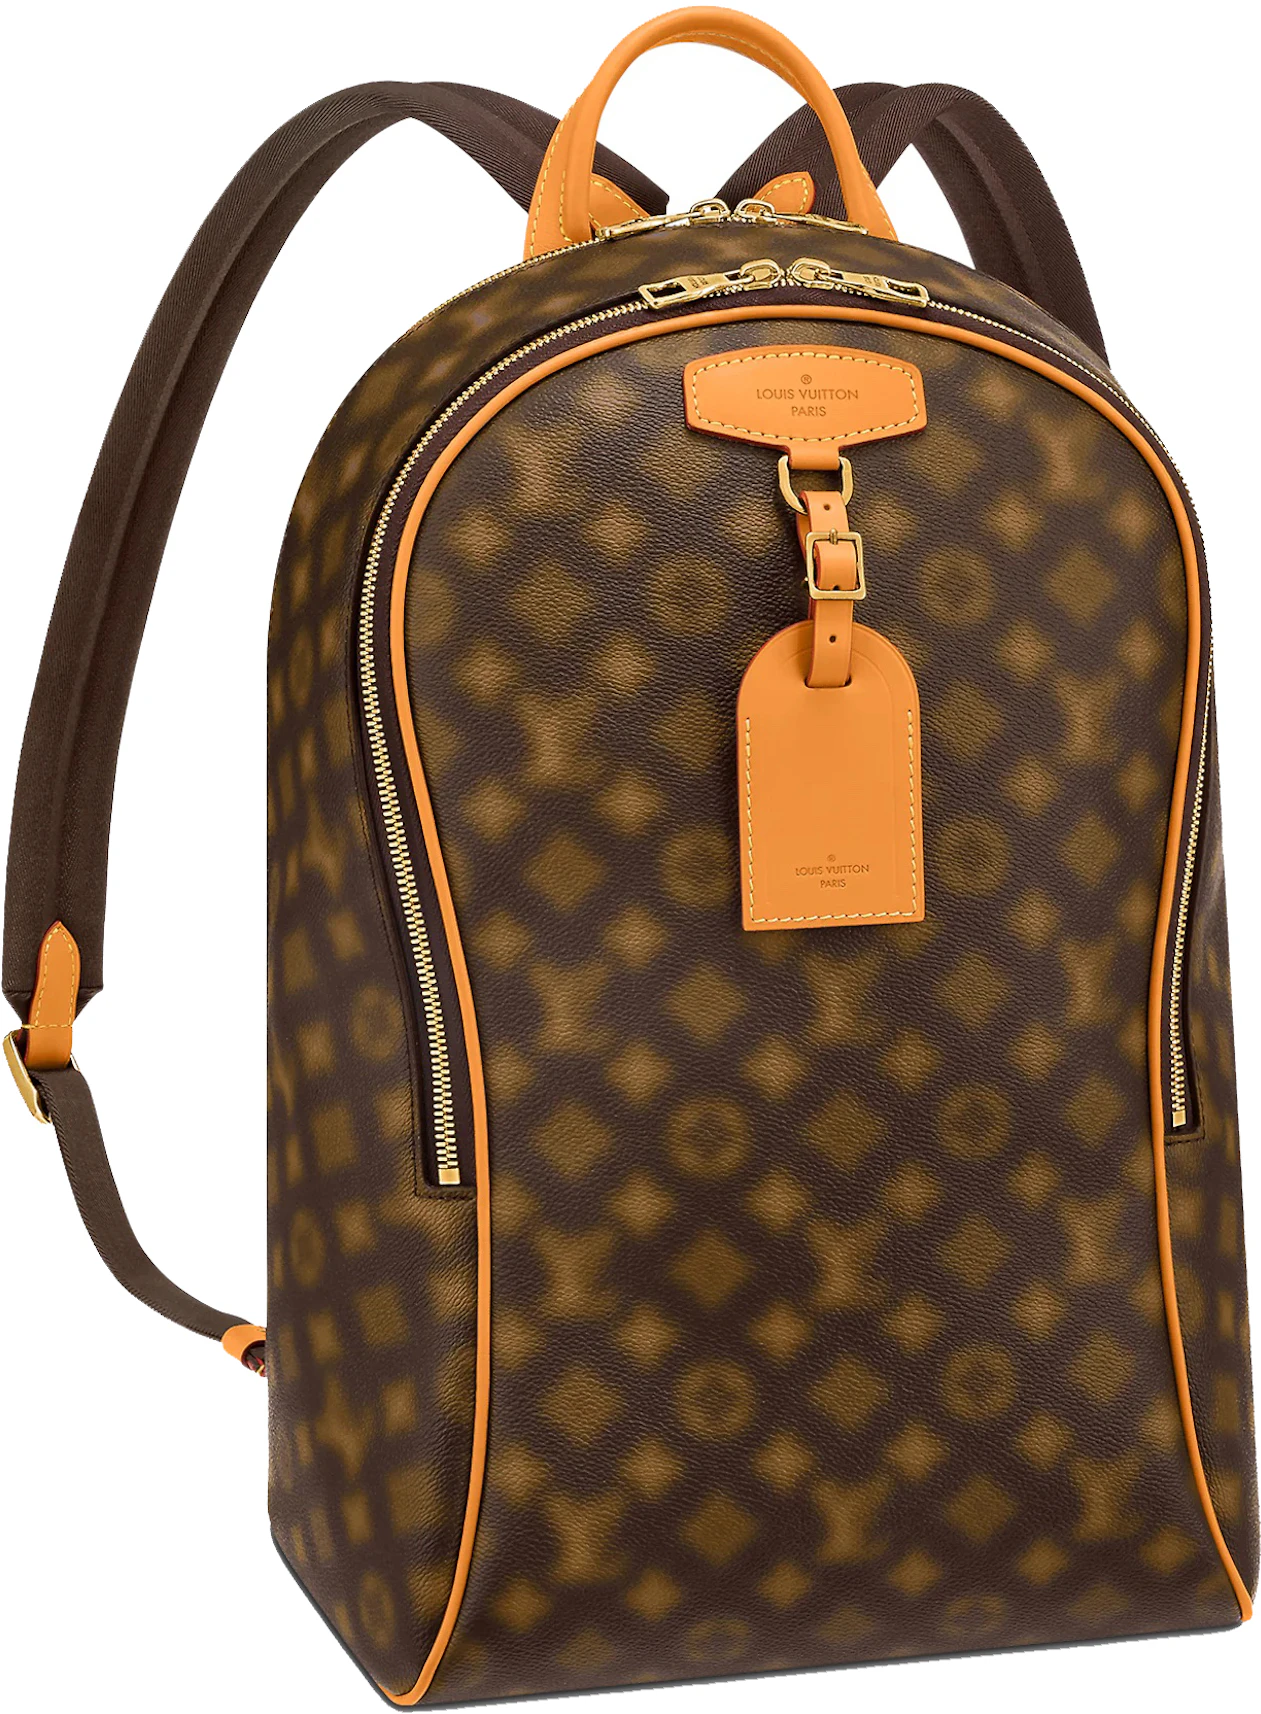 referentie Blaast op trompet Buy Louis Vuitton Backpack Accessories - StockX